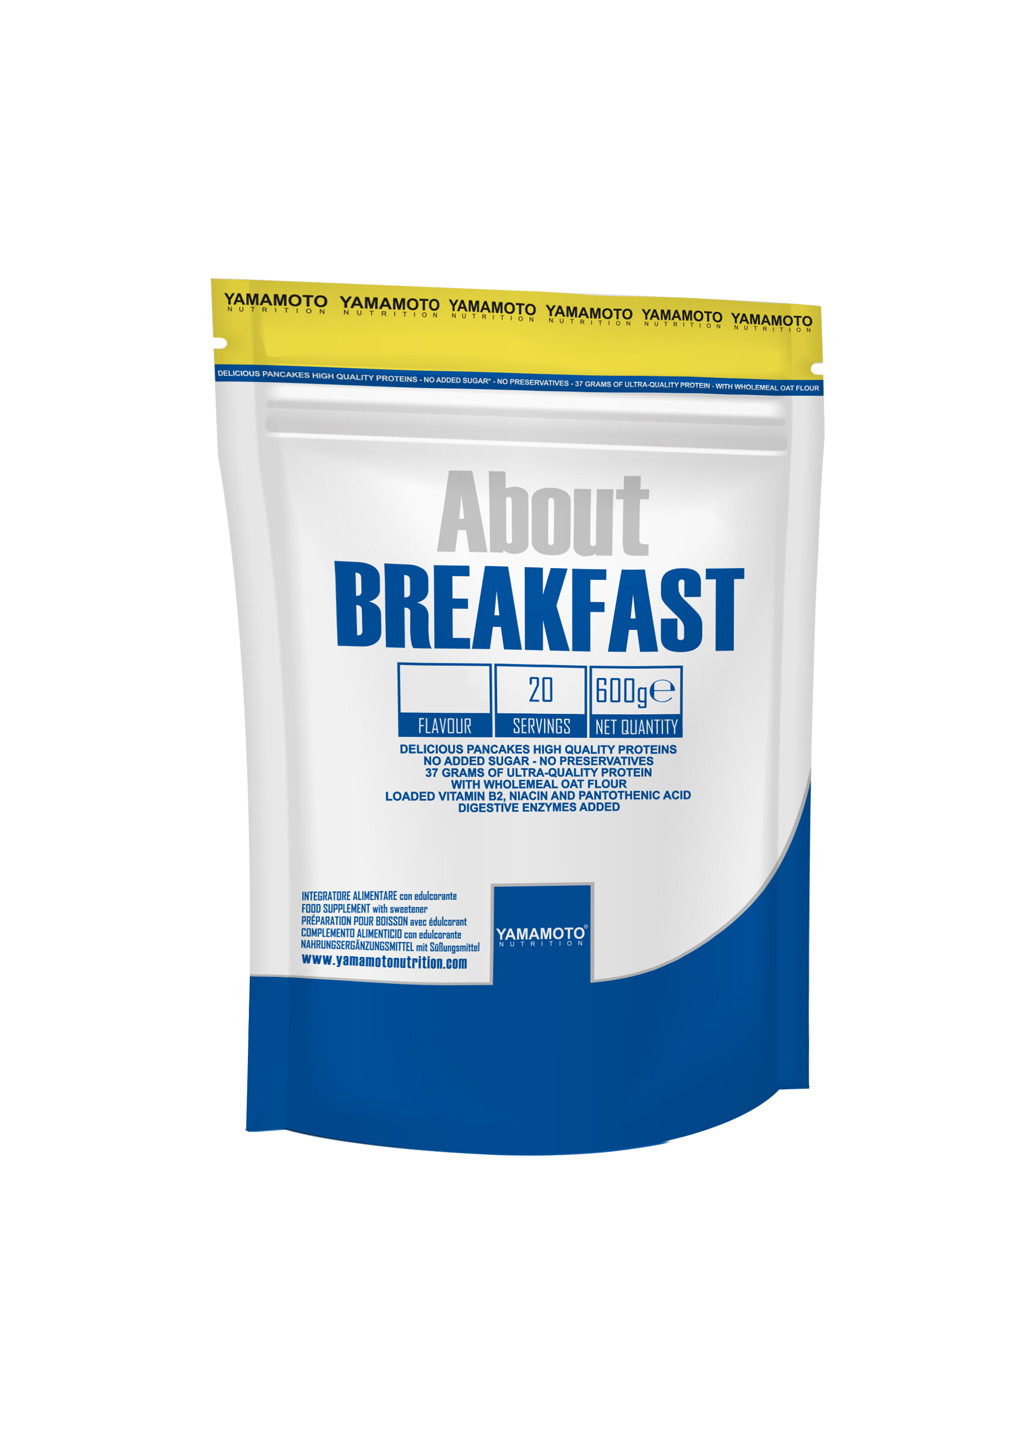 Овсянка для спортсменов About Breakfast - 600g Vanilla ] Yamamoto Nutrition (240485933)